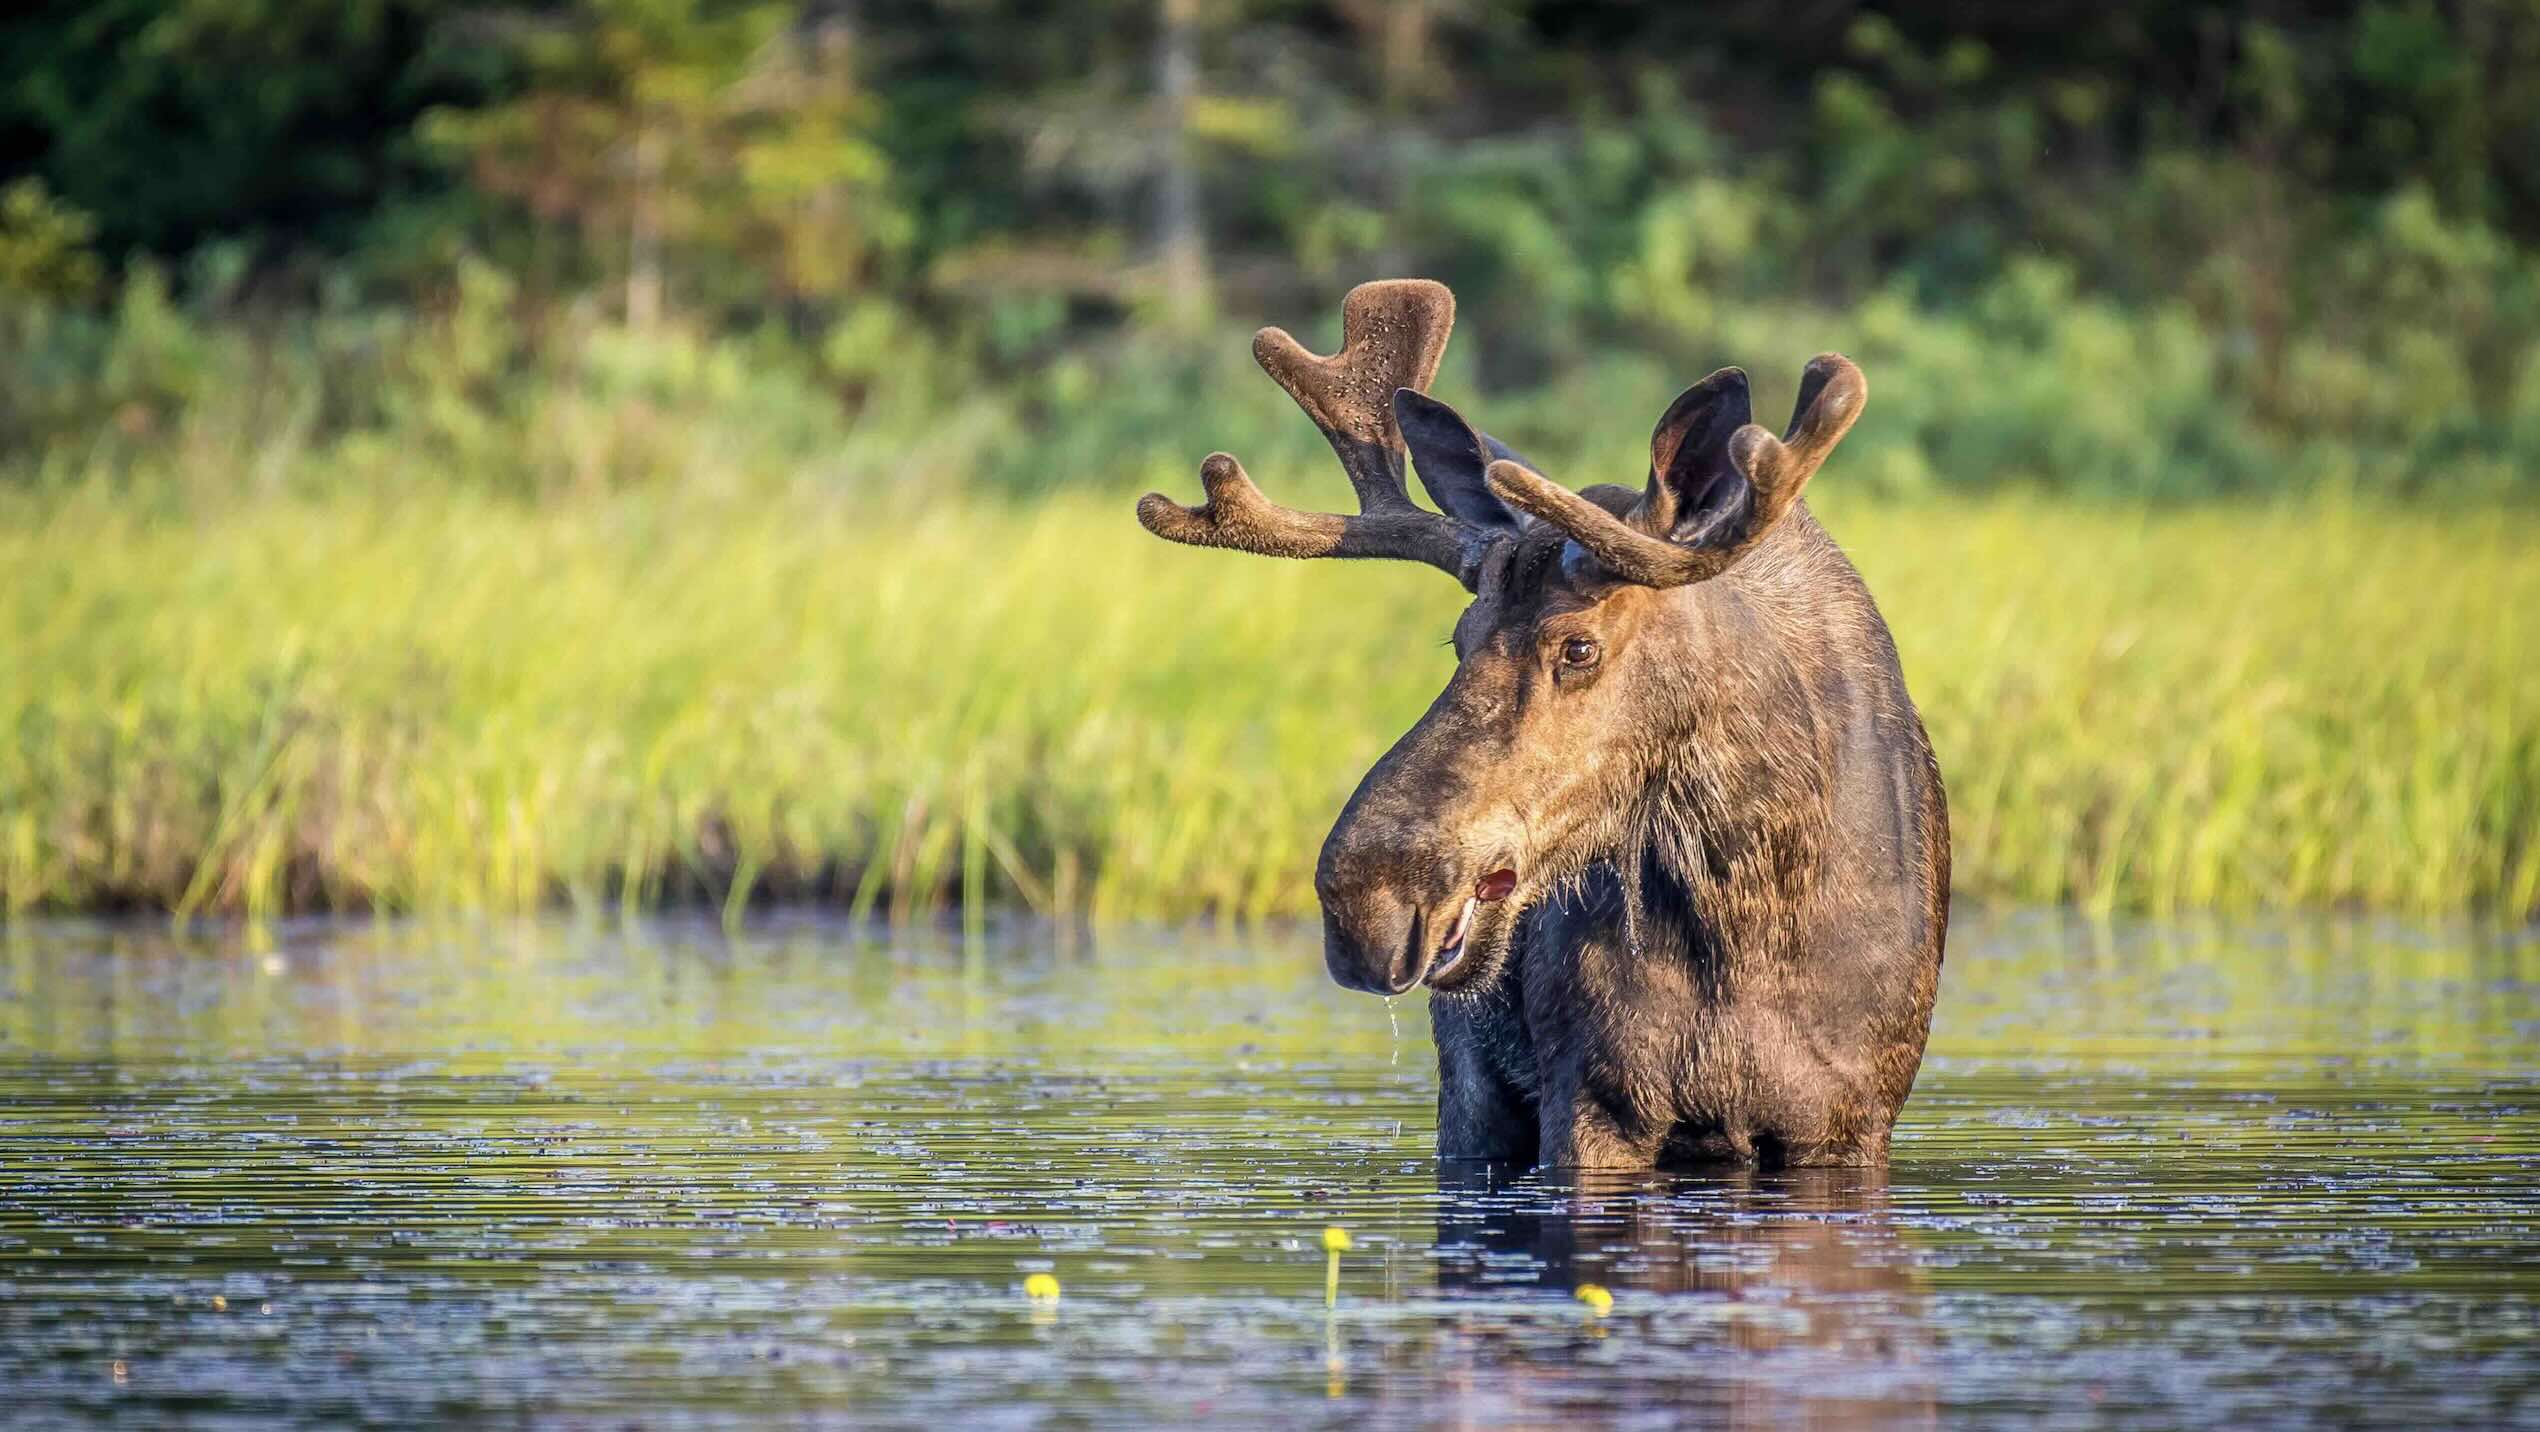 shutterstockMark Byer - Bull Moose best thigns to do in Algonquin Park